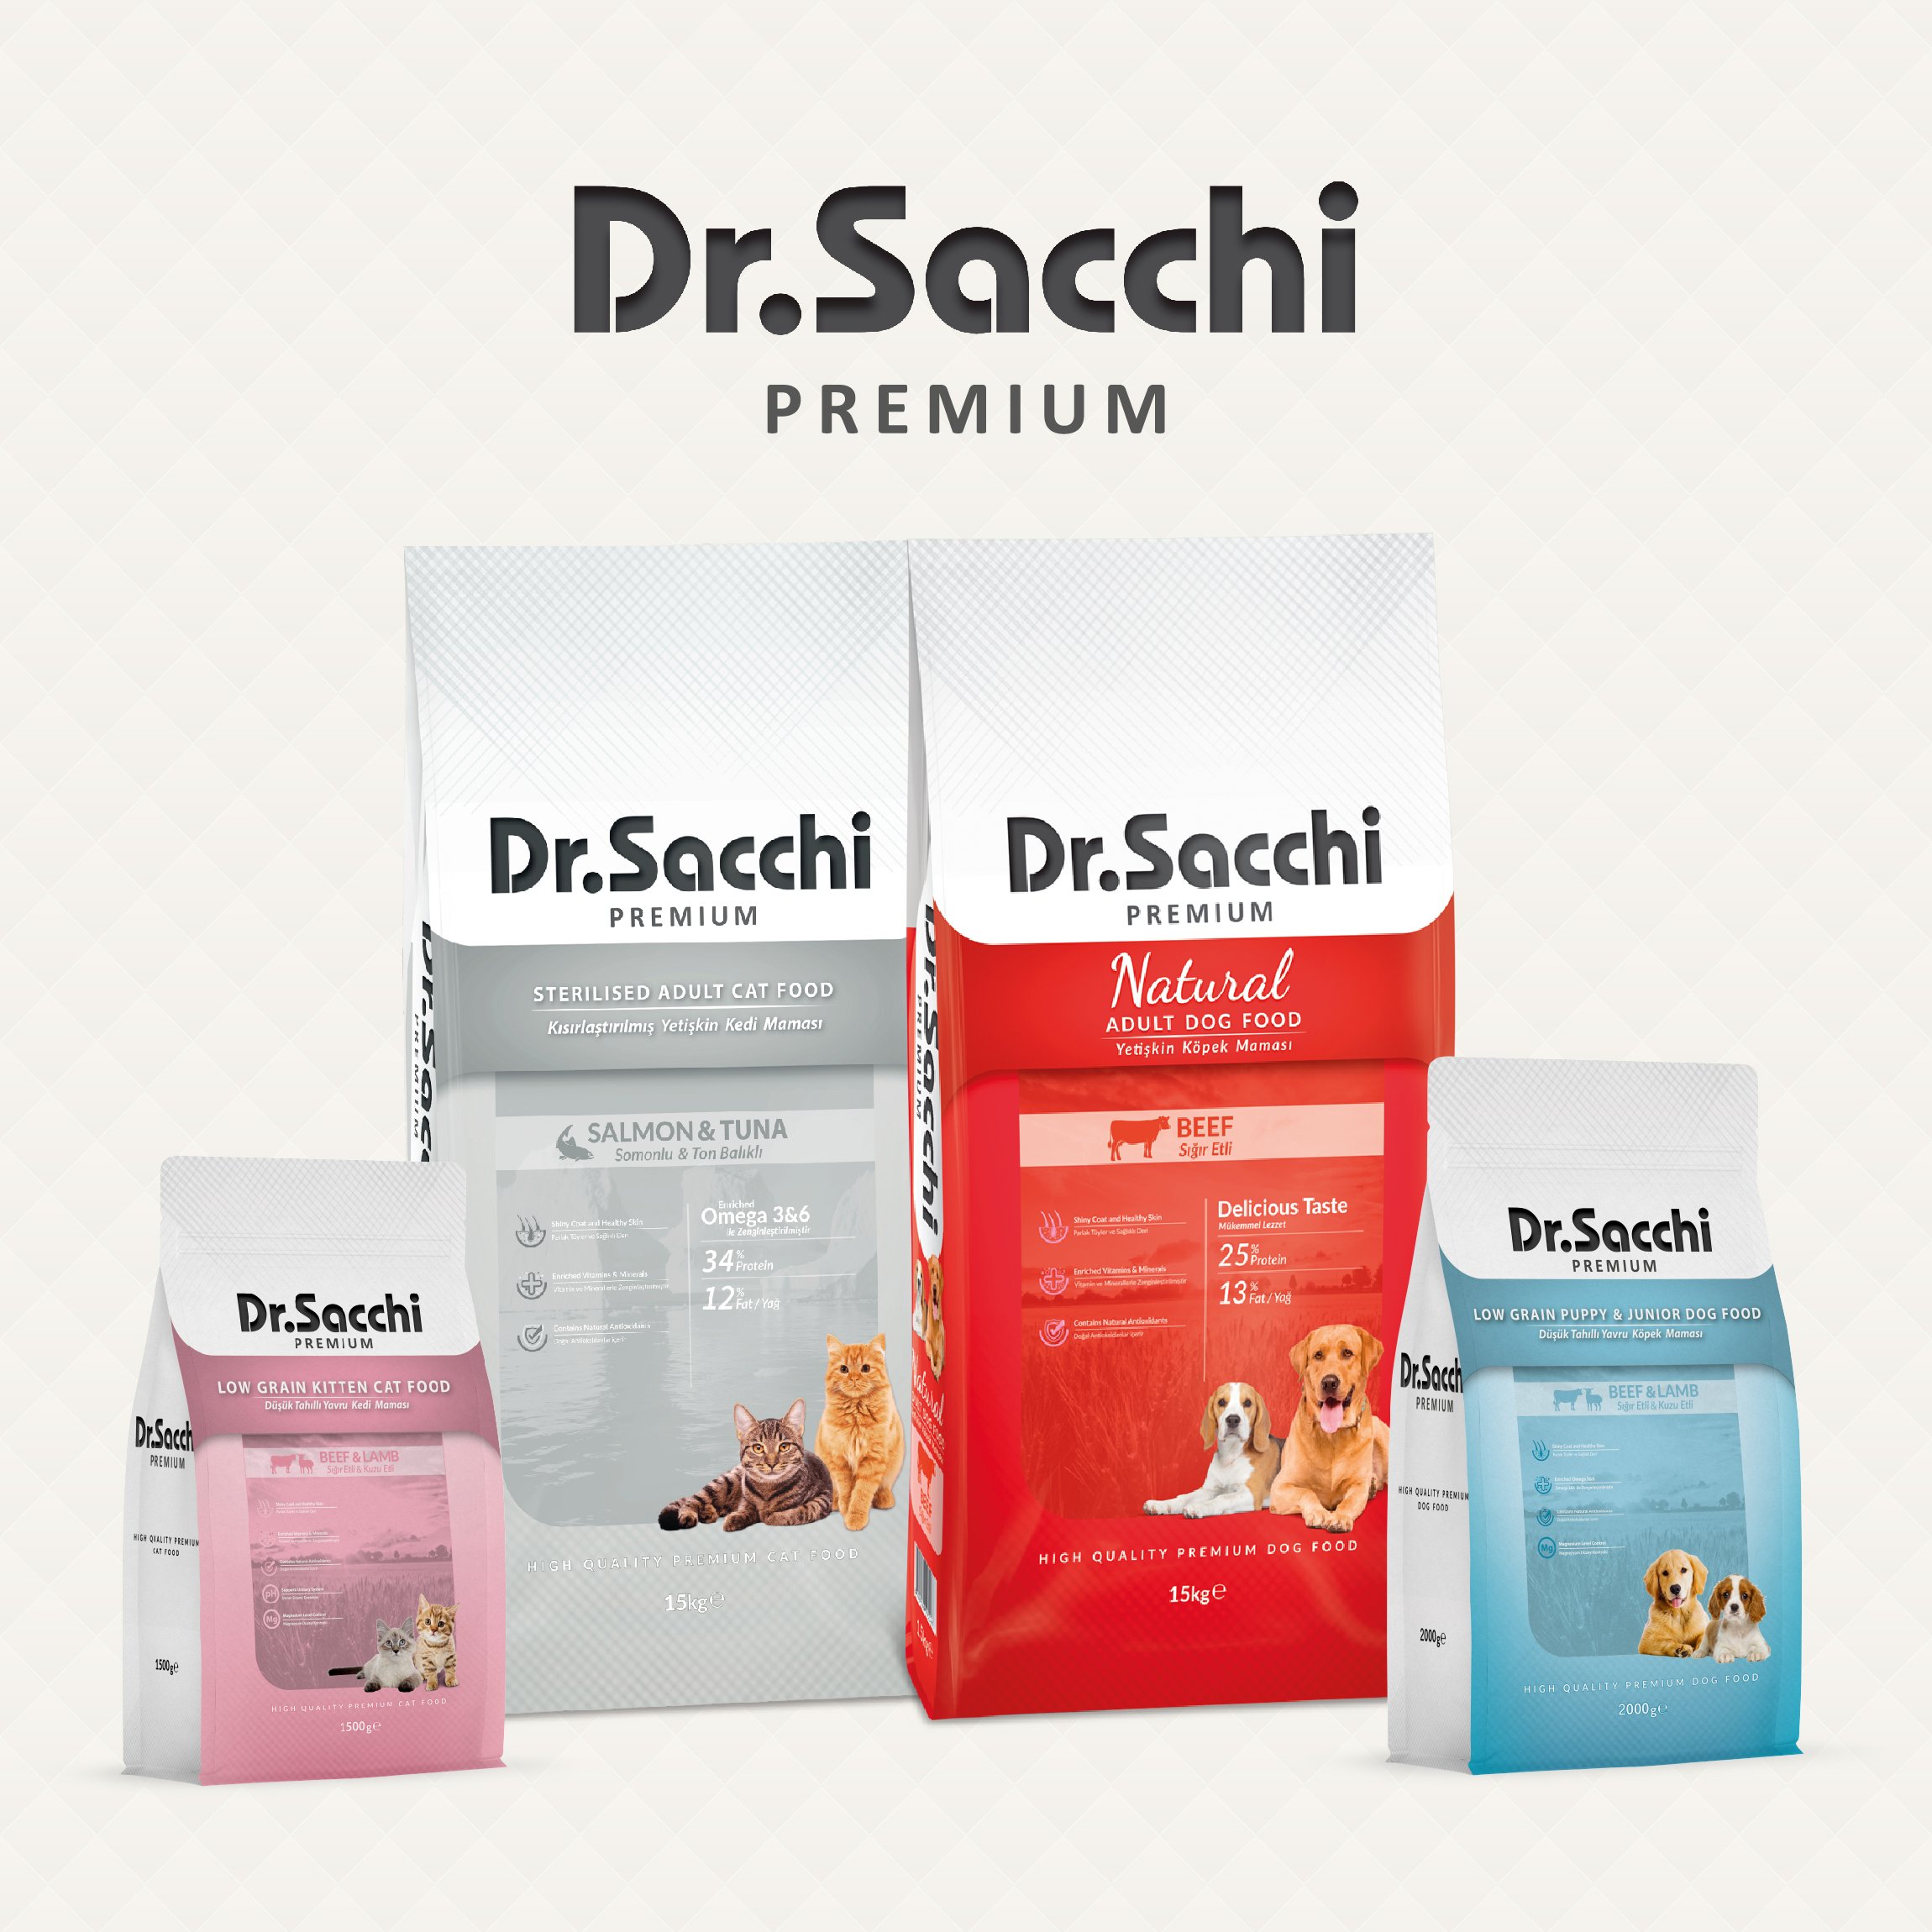 Dr. Sacchi